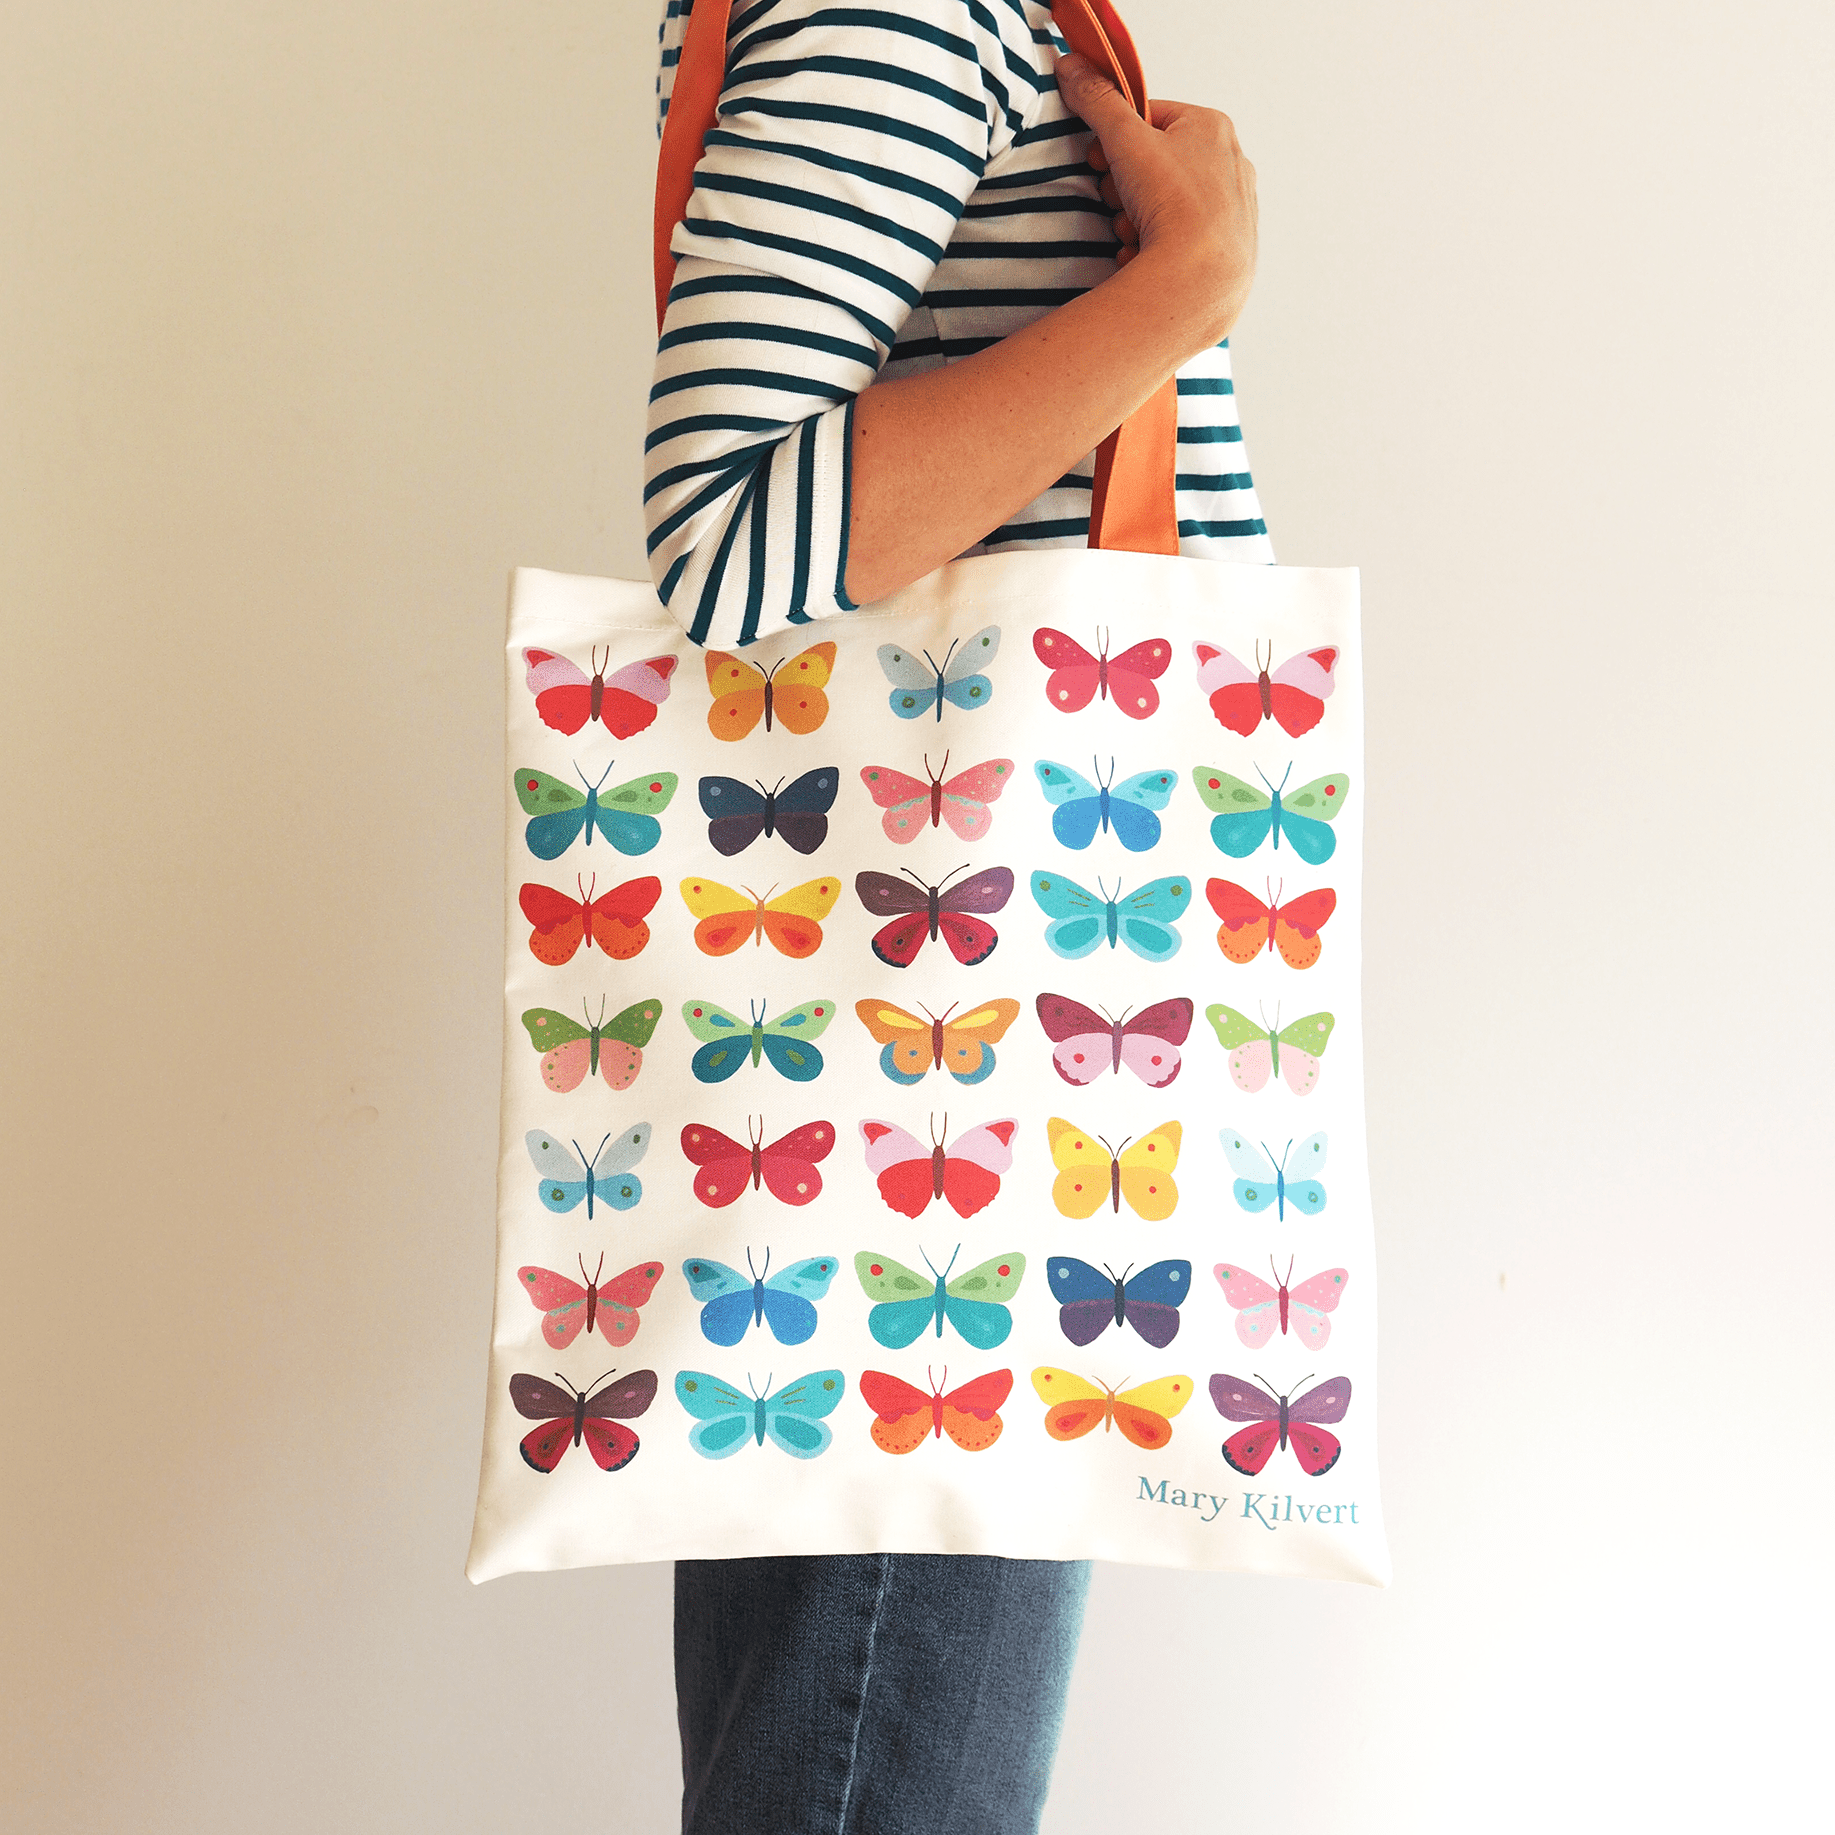 Butterfly Bag by Mary Kilvert